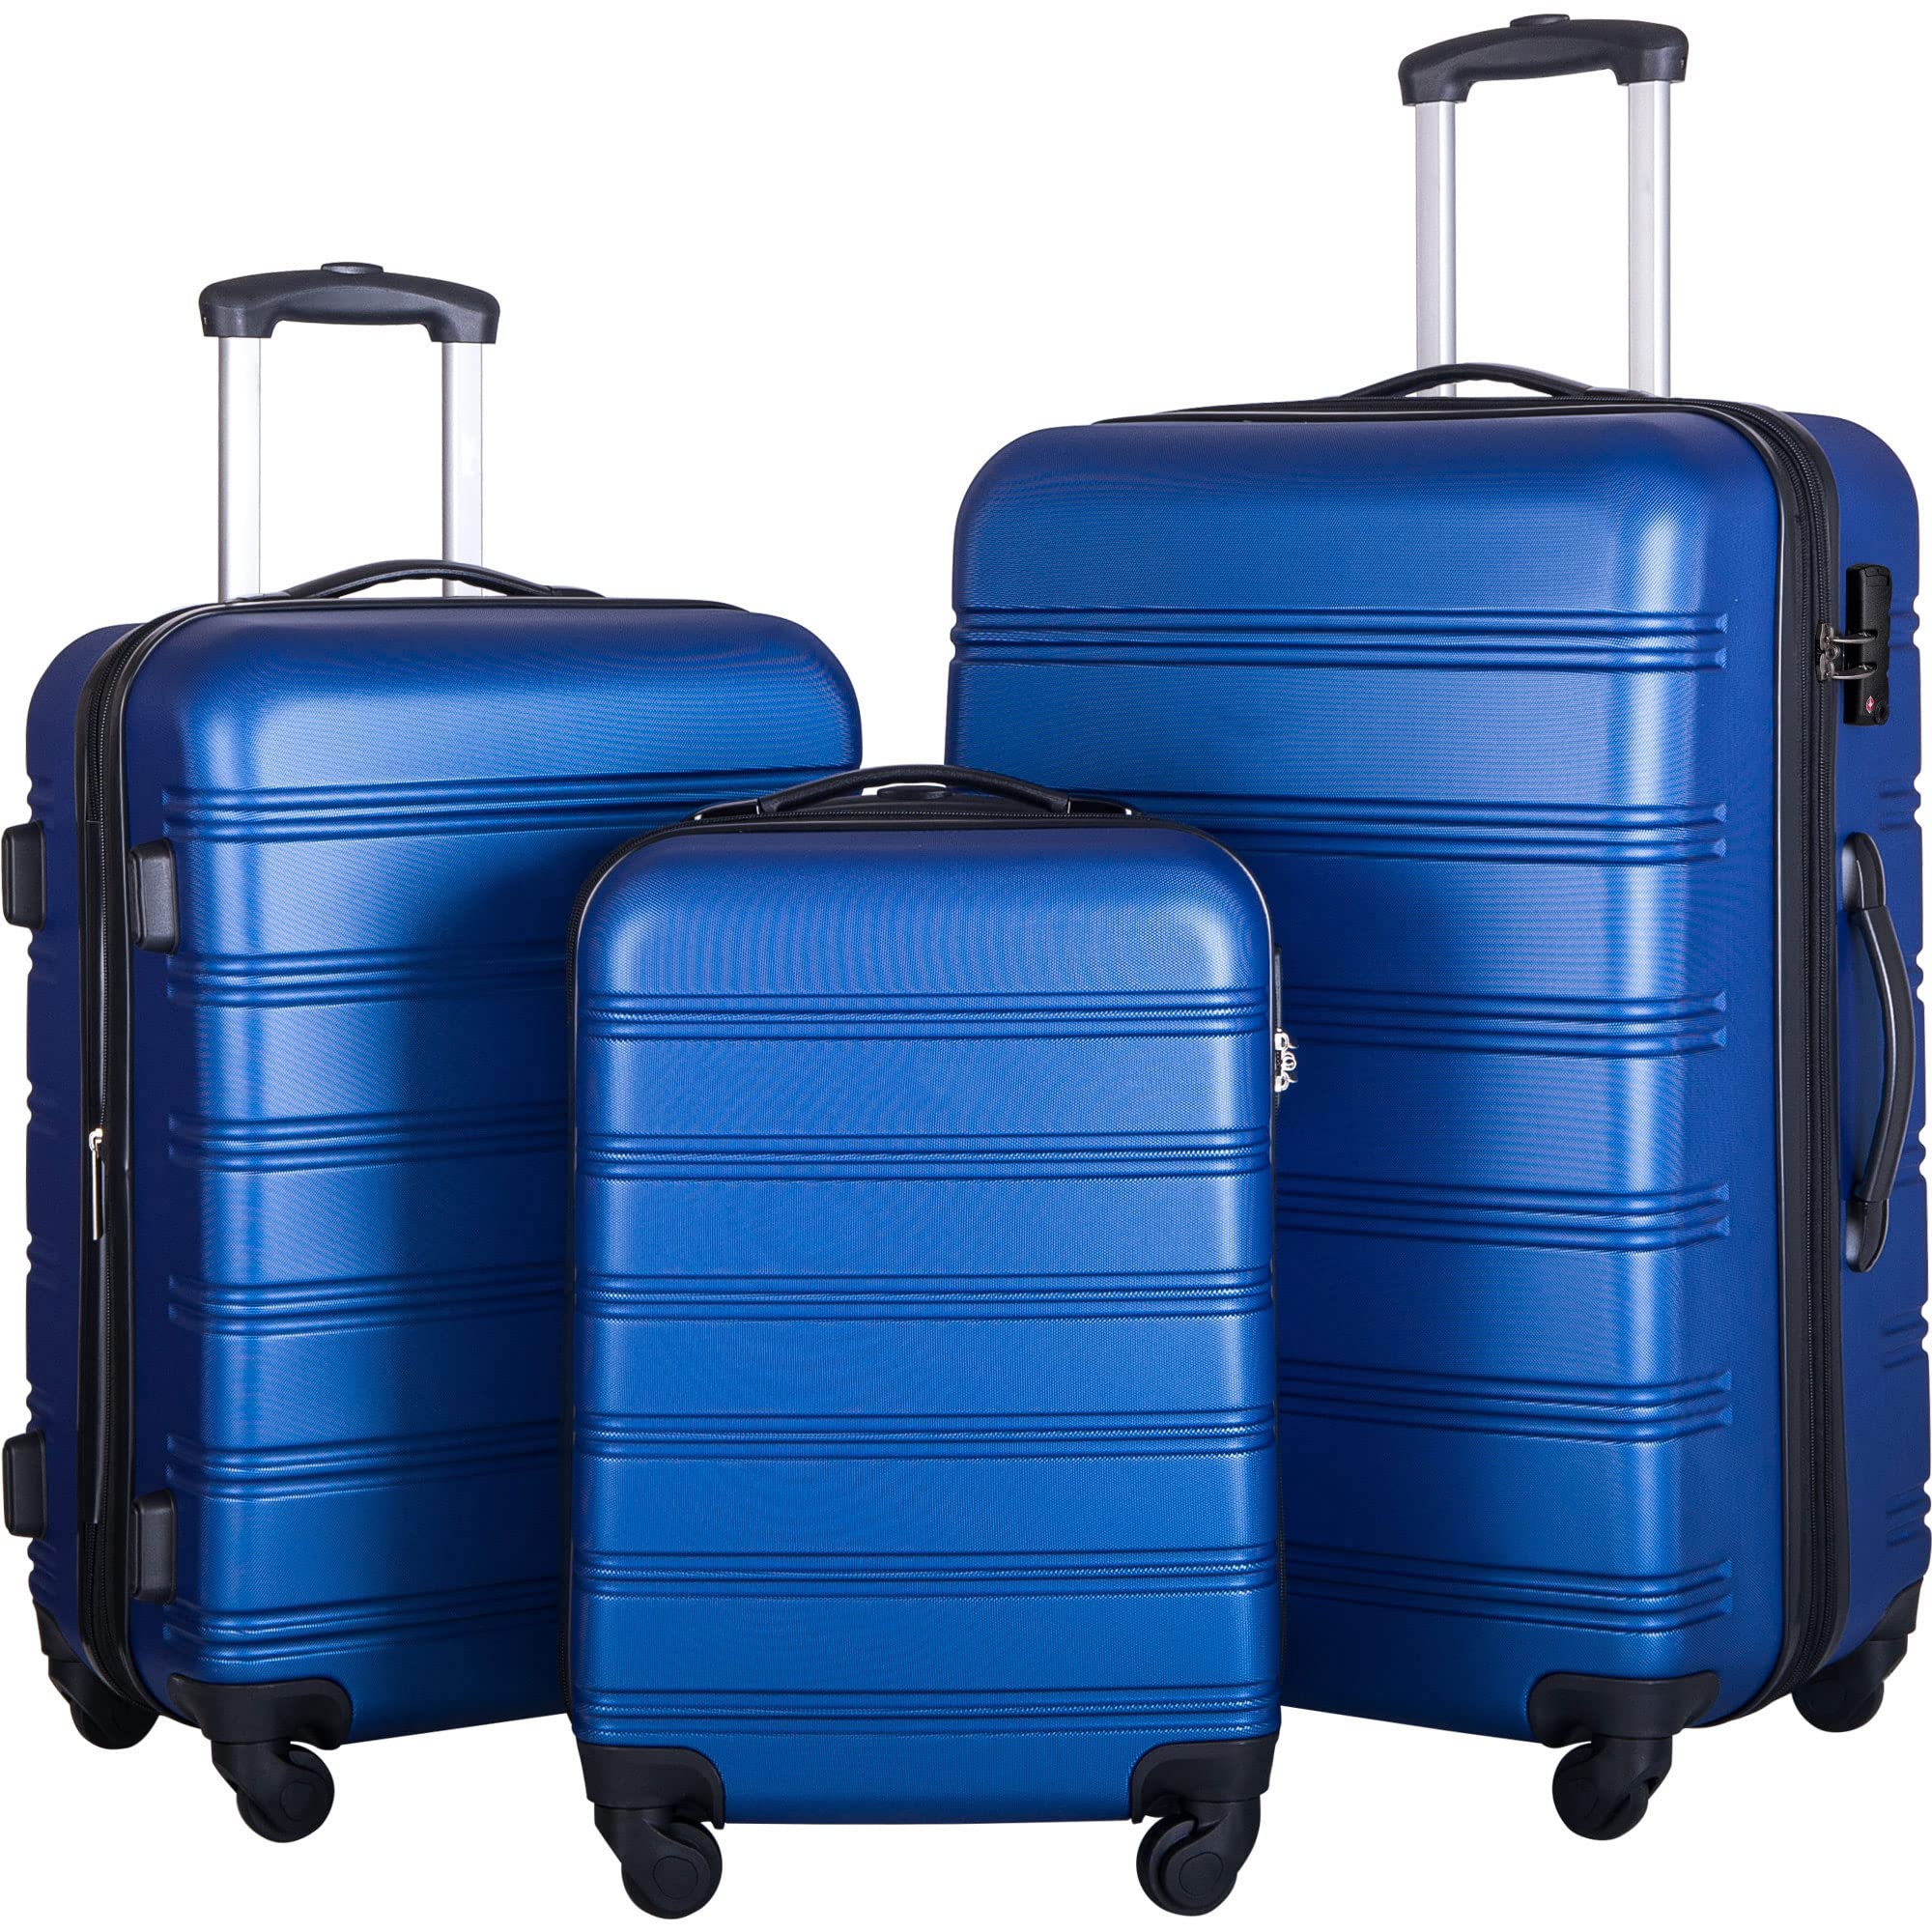 Merax Expandable Luggage TSA Locks Best Review - LightBagTravel.com One ...